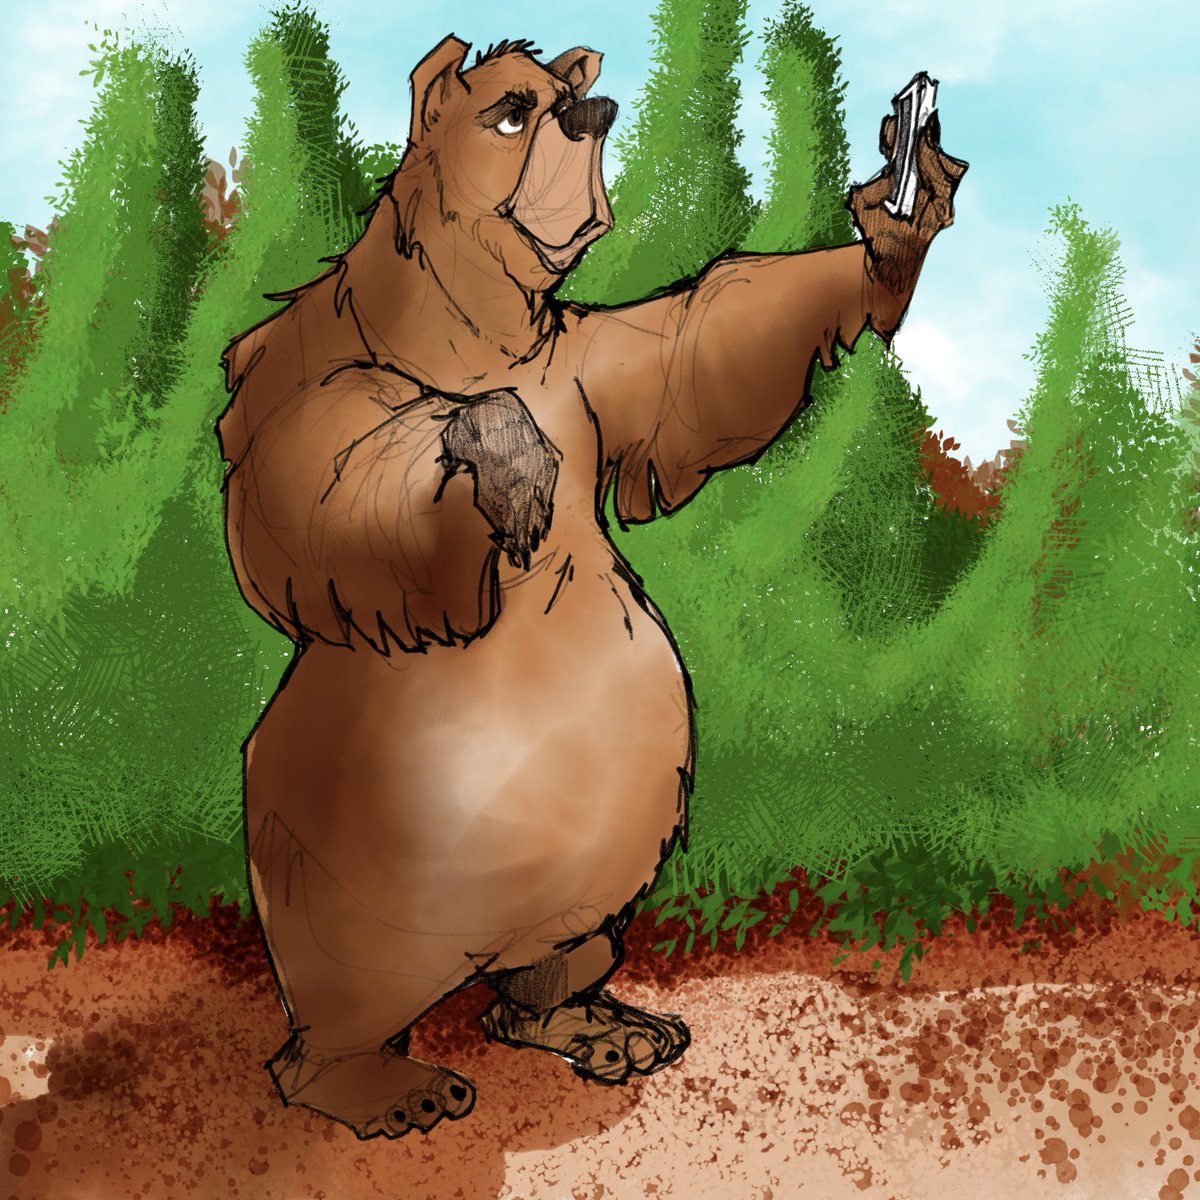 A #bear taking a #selfie #digital #drawing 
.
.
.
.
.
#art #sketch #sketch #illustration #doodlebags #nashville #nashvilleart #characterdesign #nashvilleartist #getlost #deepinthewoods #outdoors #wildlife #adobefresco #draw